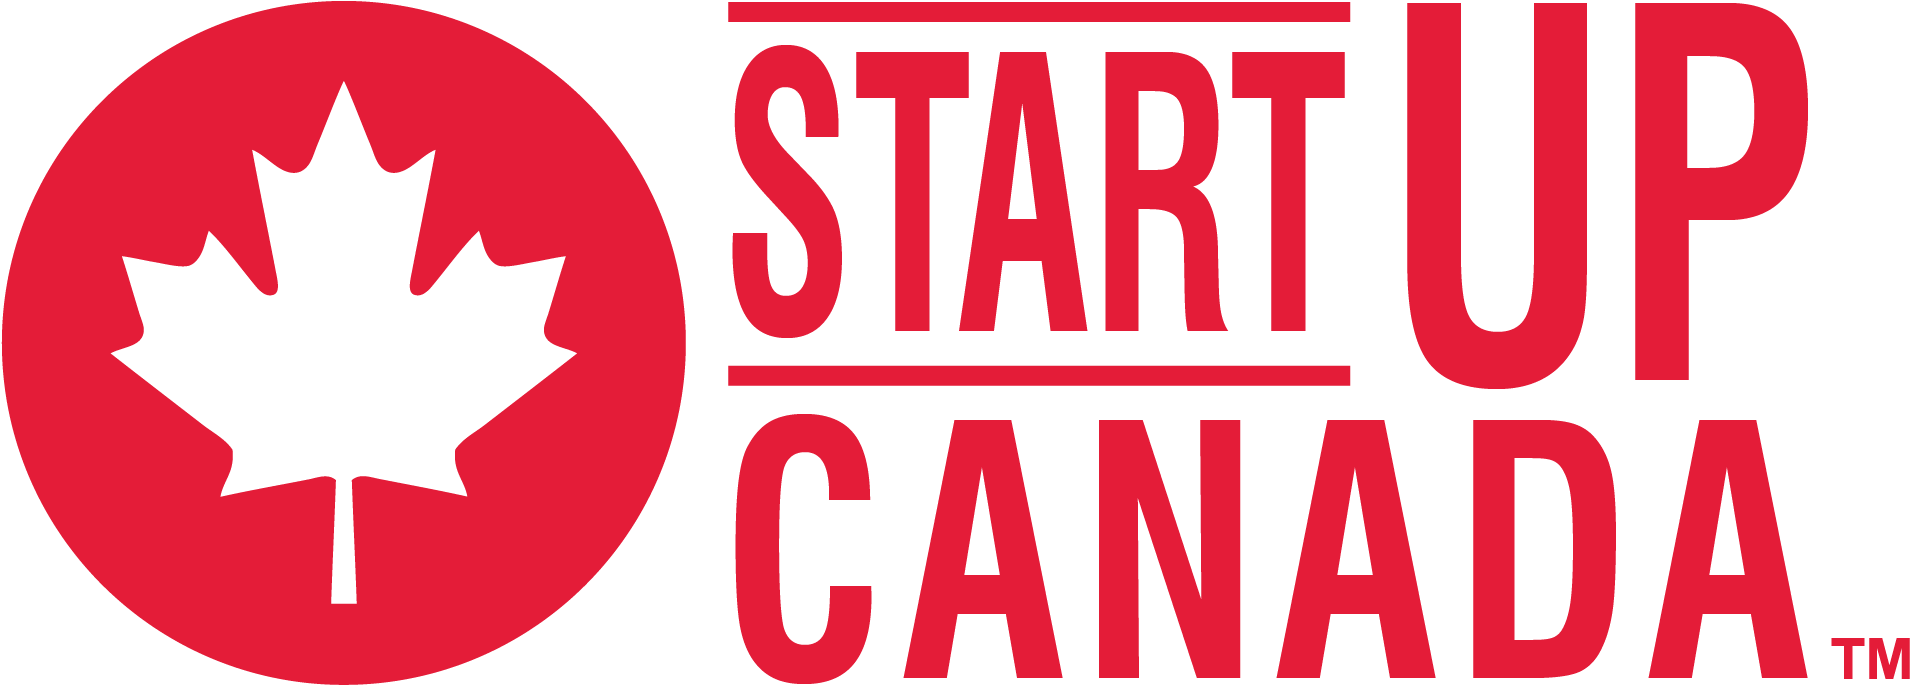 Startup Canada Press Kit - Start Up Durham (1920x1080)